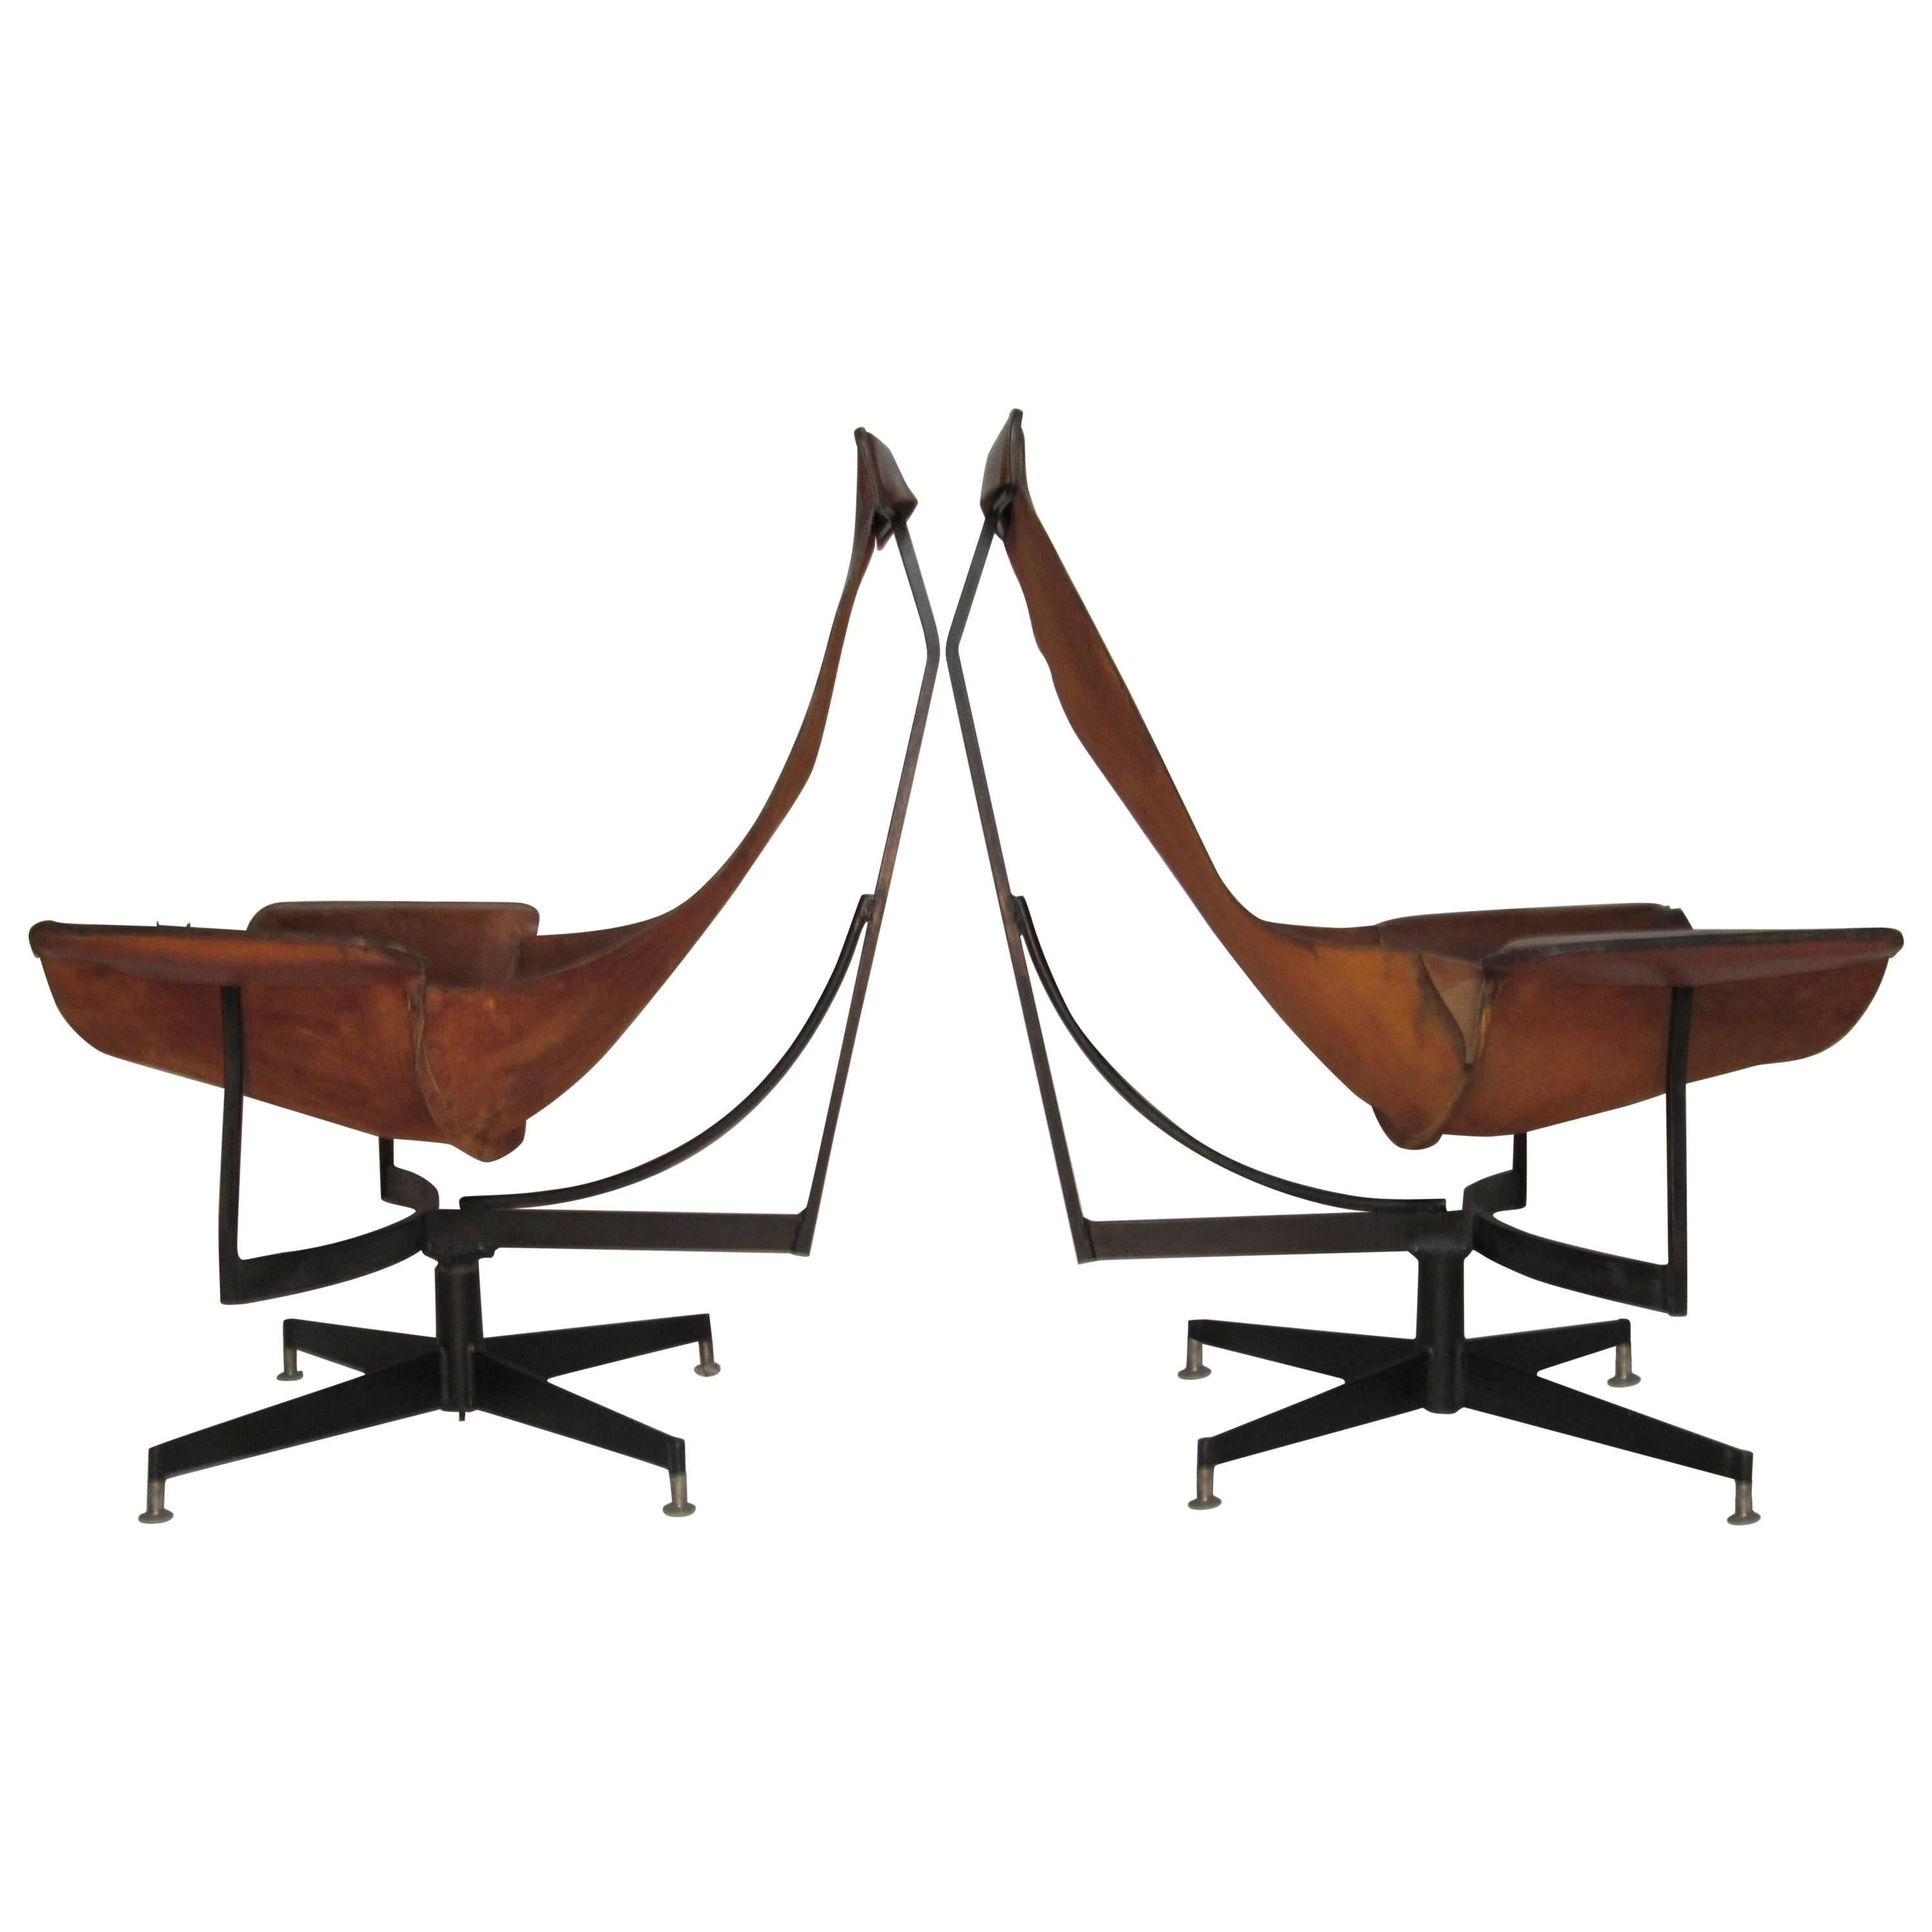 Two William Katavolos Swivel "K Chairs" for Leathercraft, circa 1952